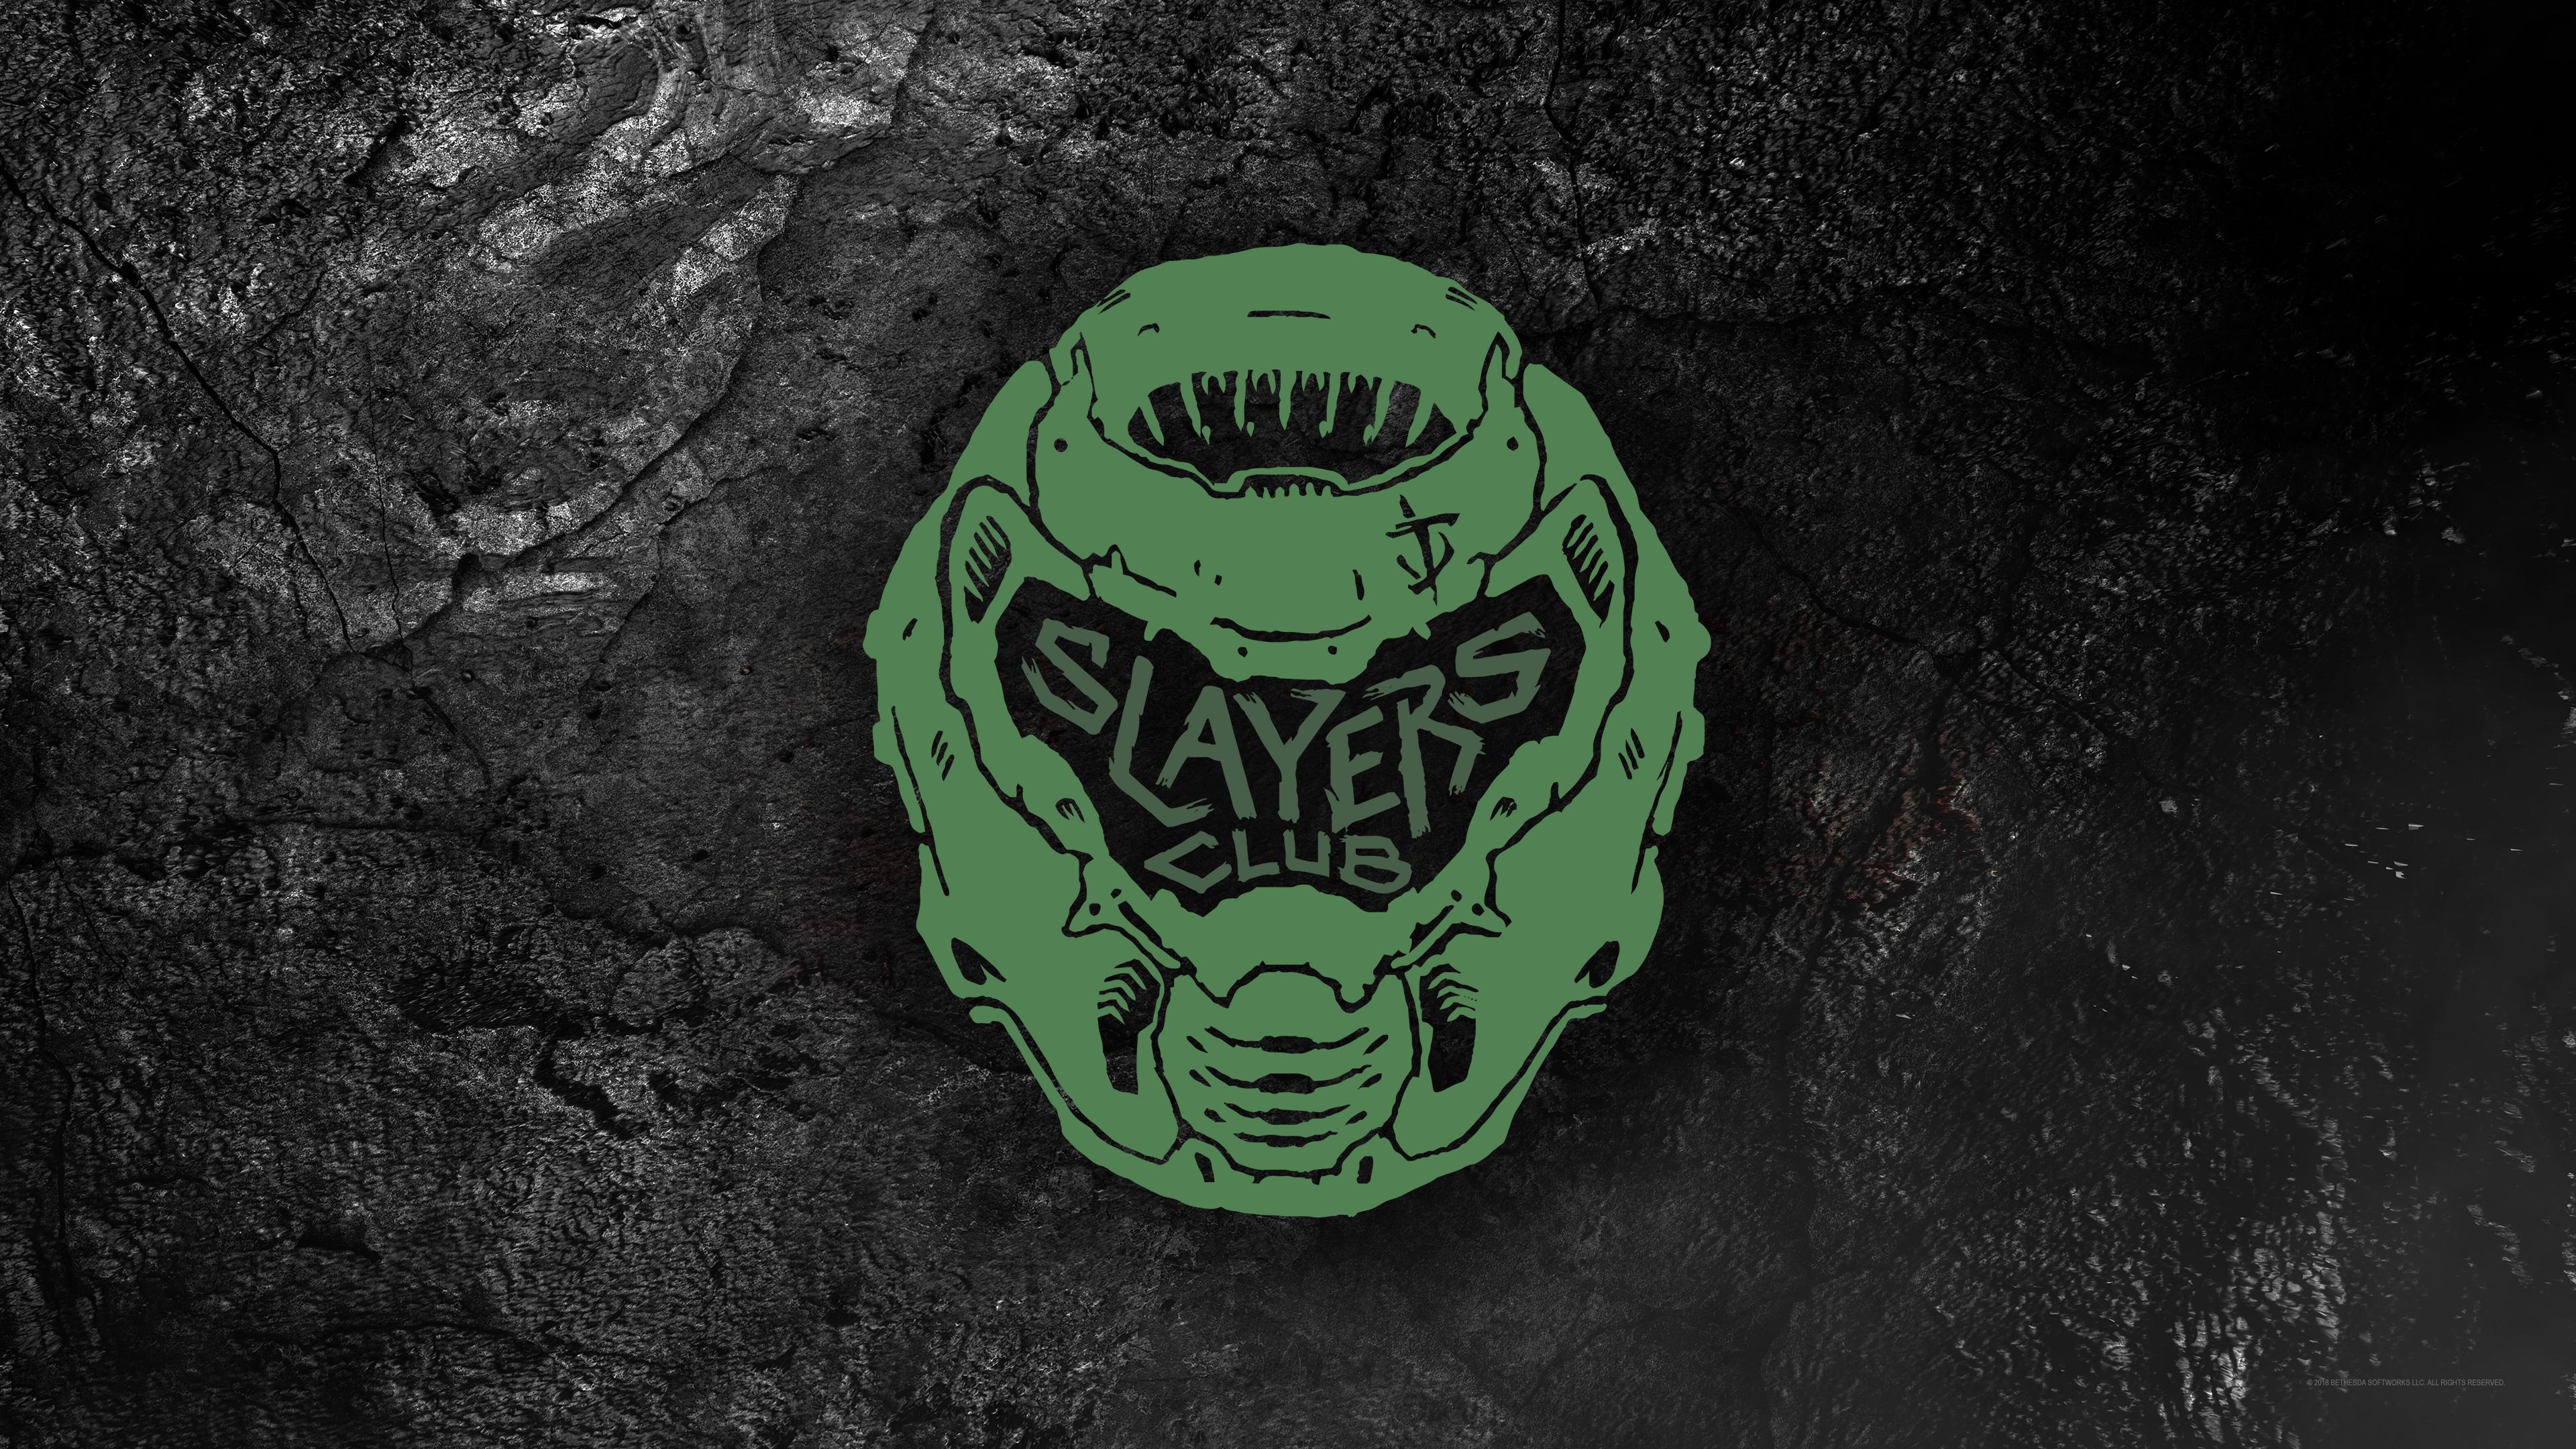 Slayers Club. DOOM 25th Anniversary